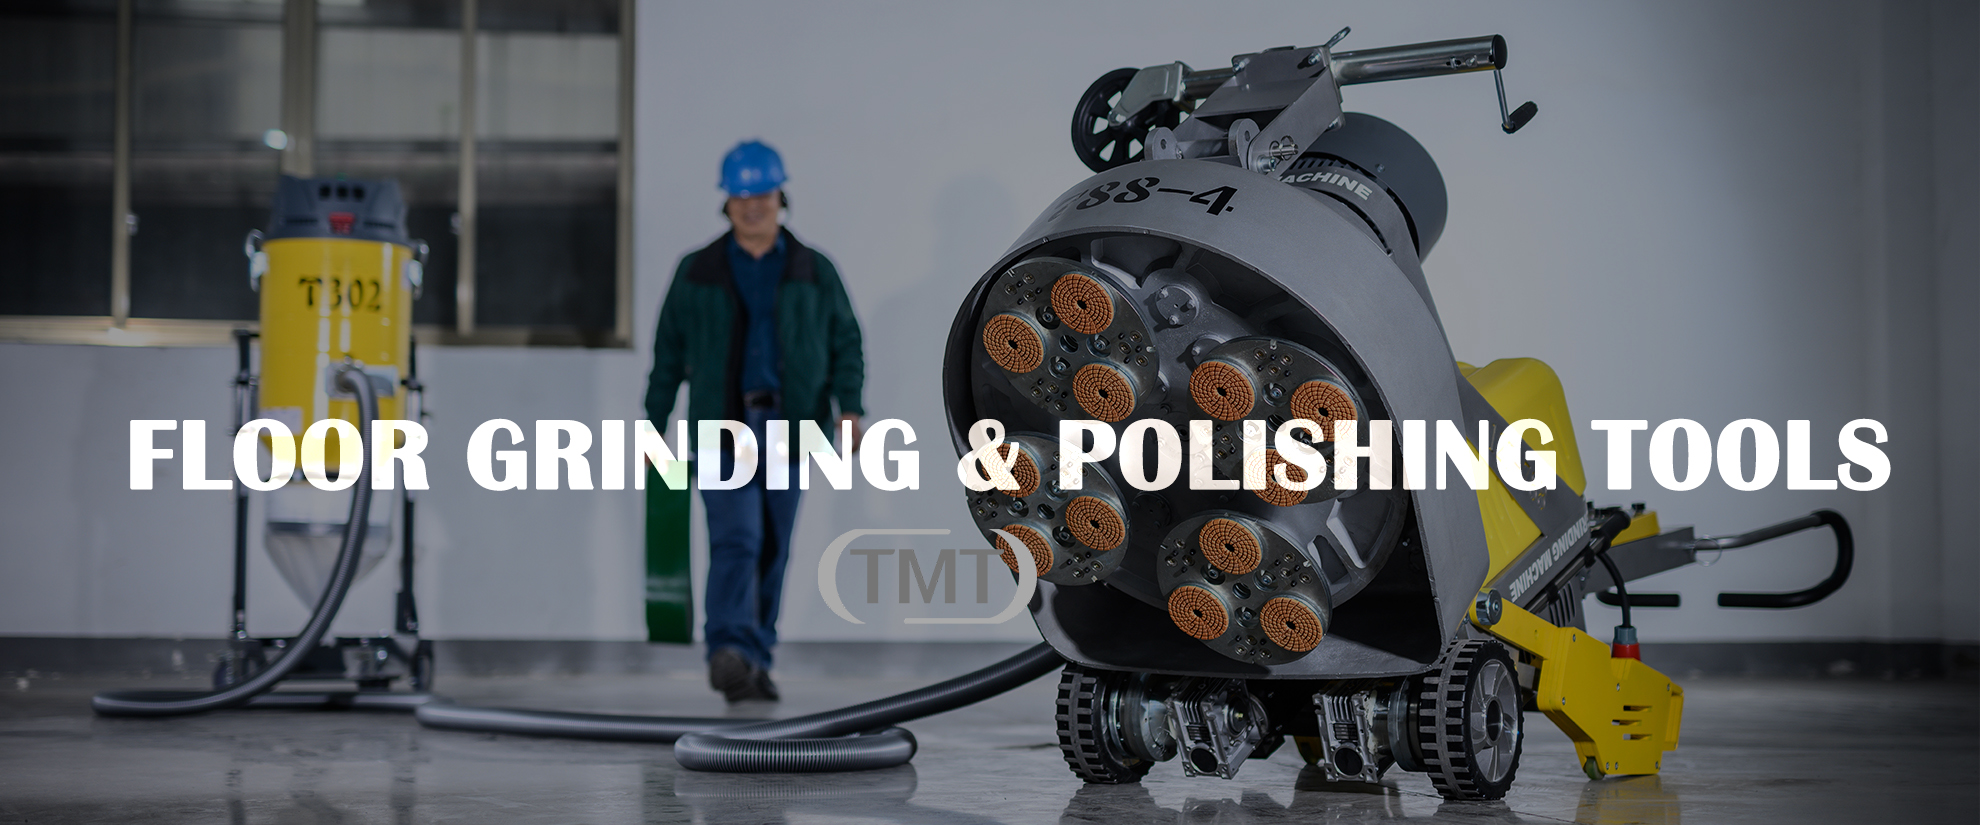 Floor grinding and polishing tools